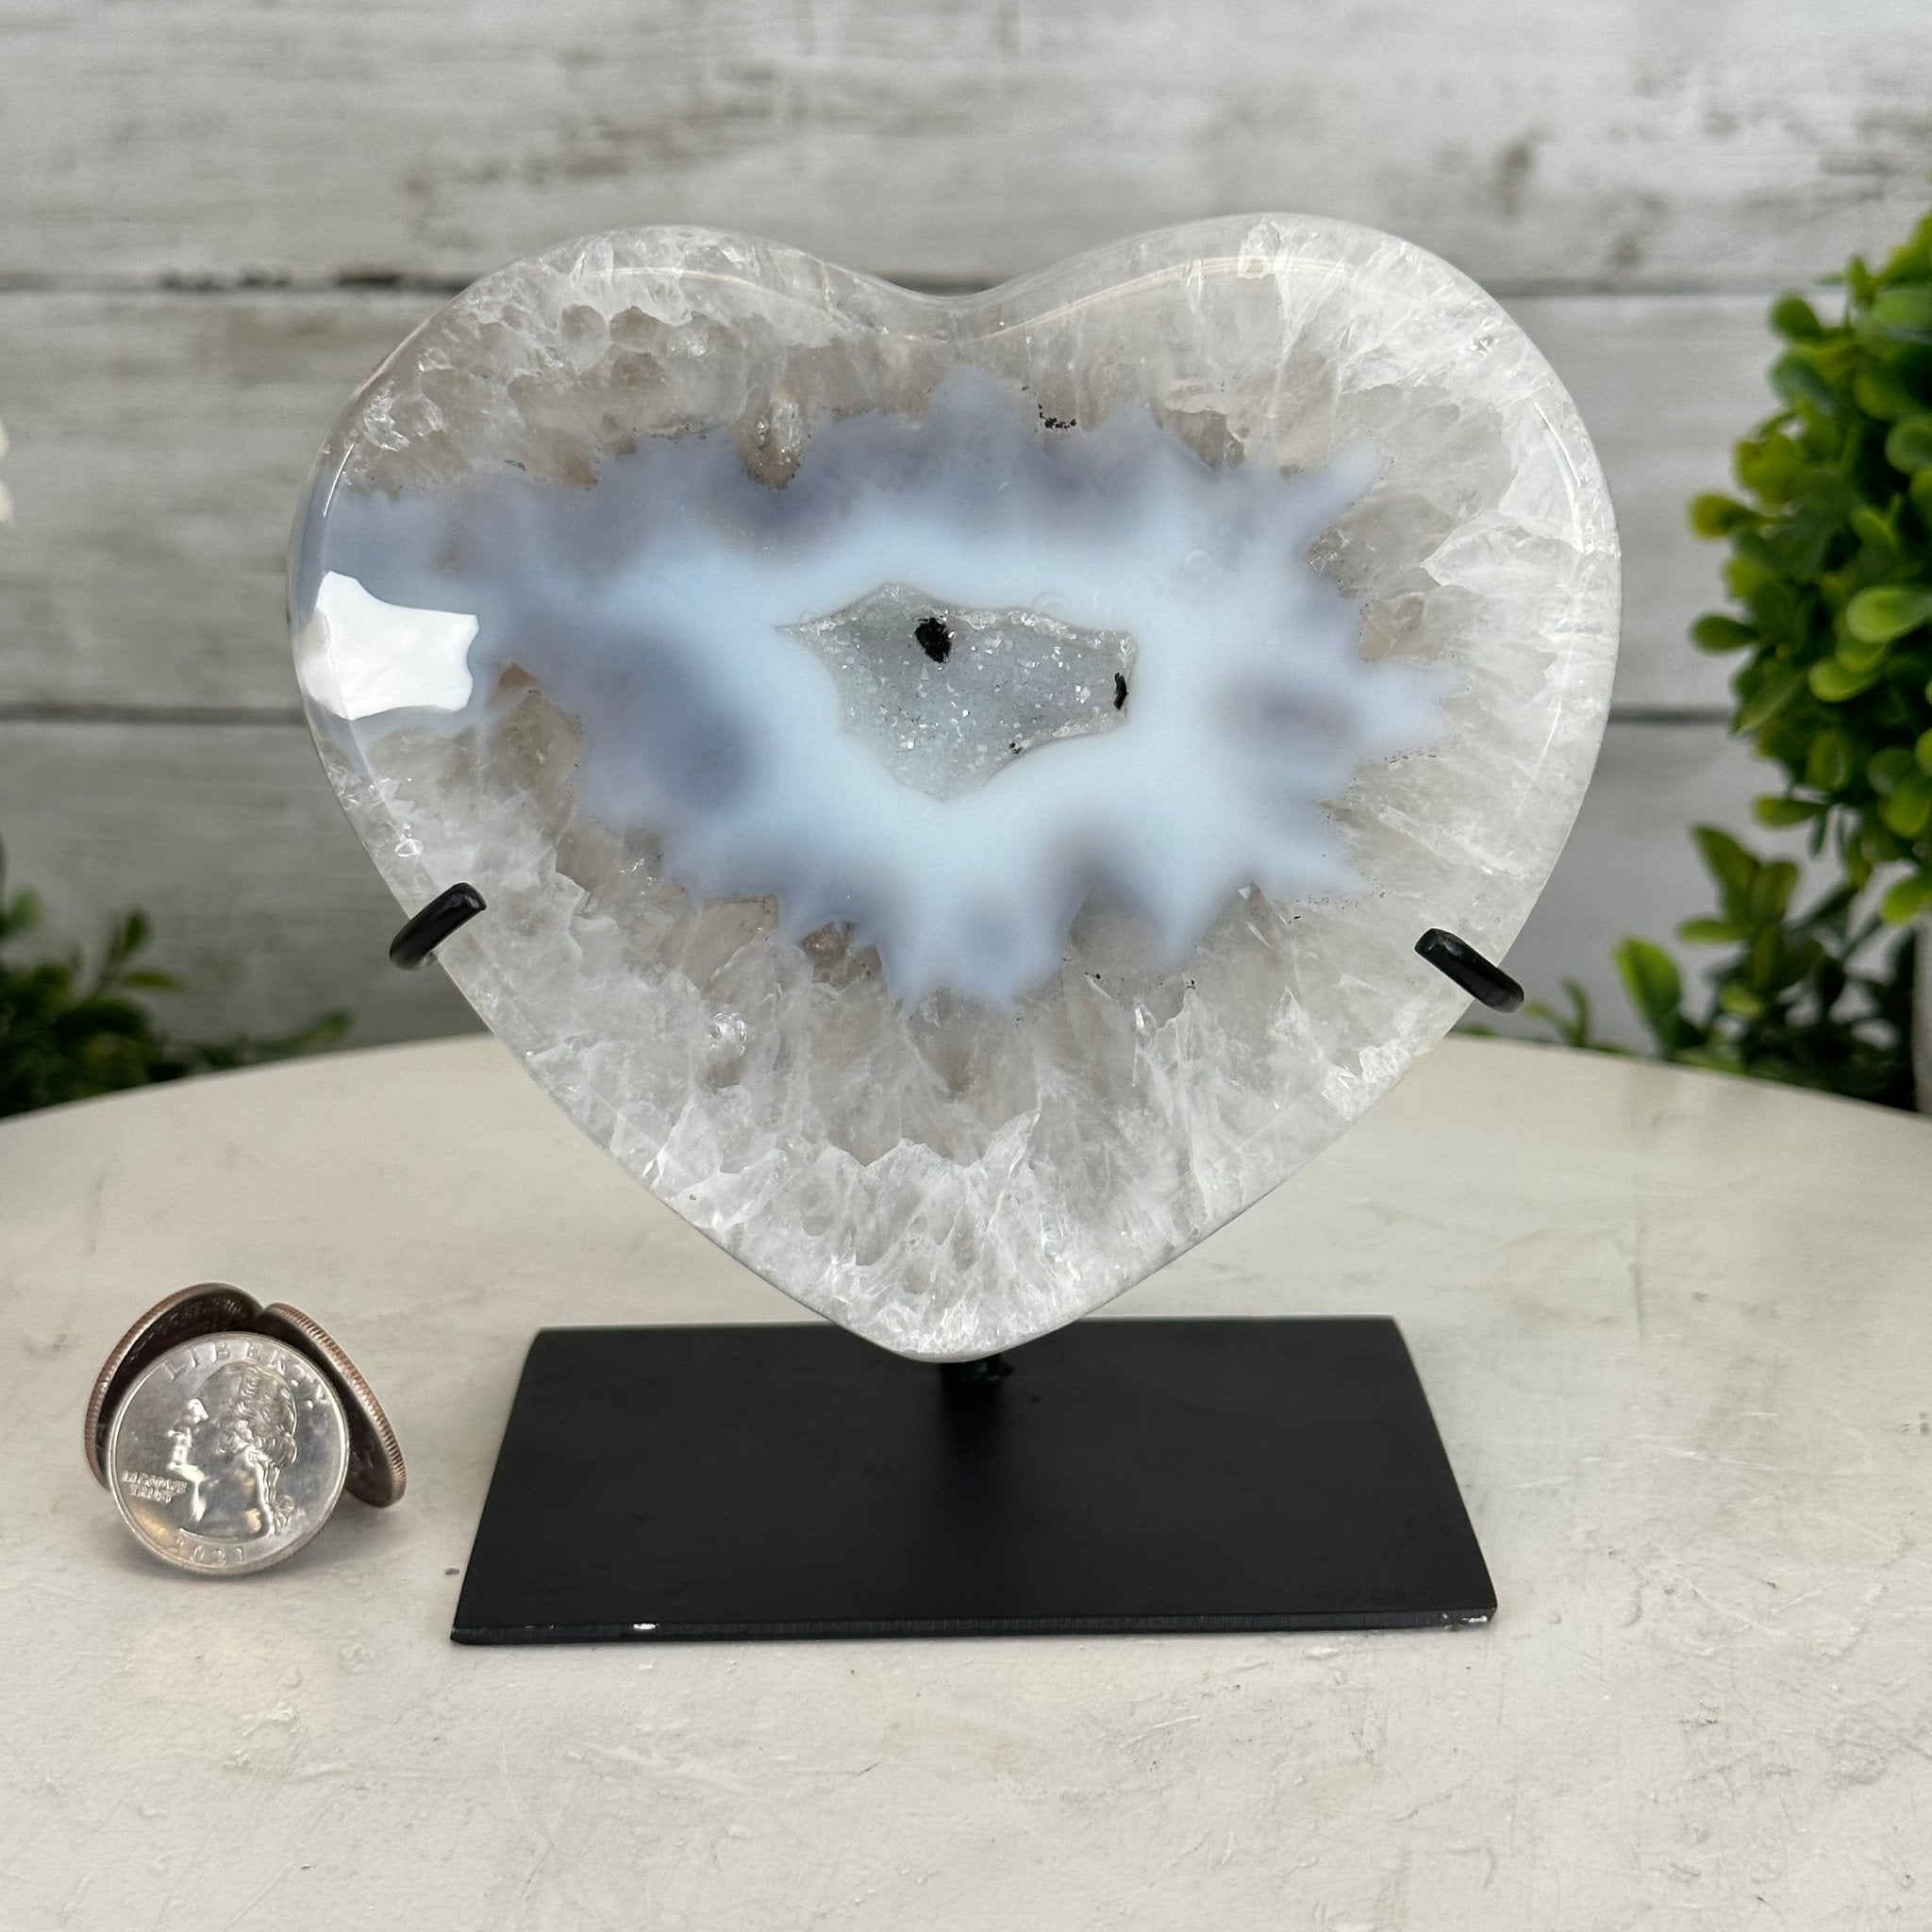 Polished Agate Heart Geode on a Metal Stand, 3.2 lbs & 5.3" Tall, Model #5468-0045 by Brazil Gems - Brazil GemsBrazil GemsPolished Agate Heart Geode on a Metal Stand, 3.2 lbs & 5.3" Tall, Model #5468-0045 by Brazil GemsHearts5468-0045